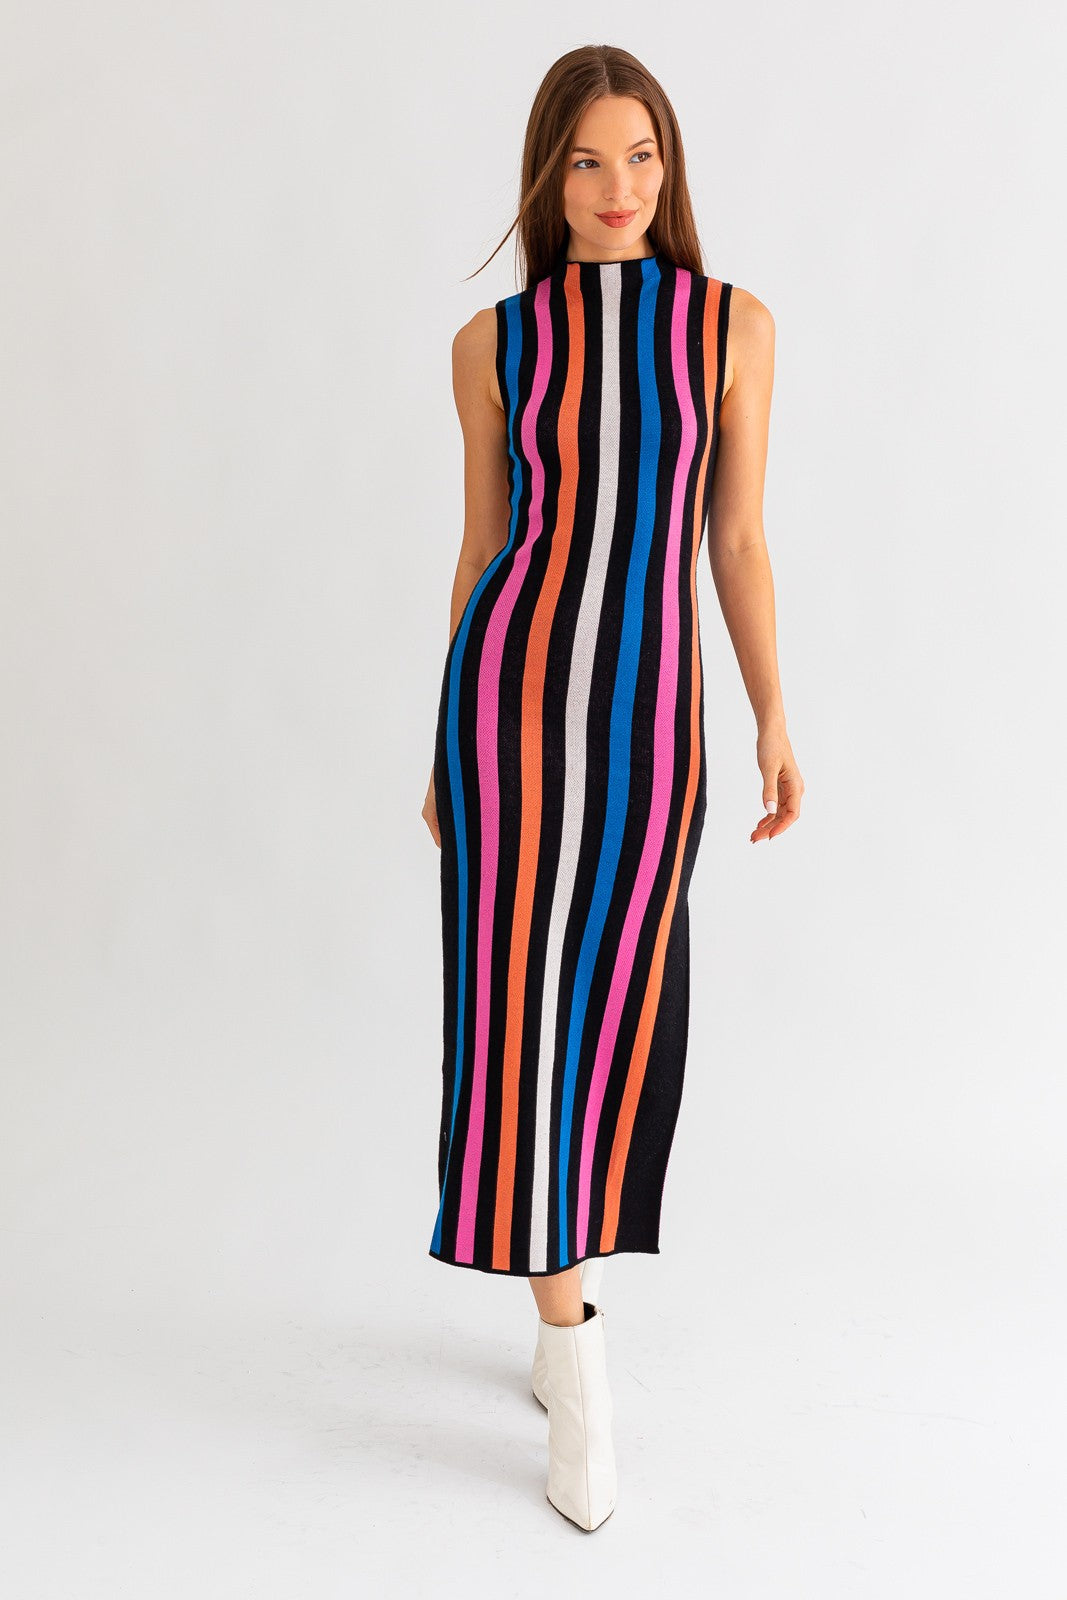 Wren colorful striped dress